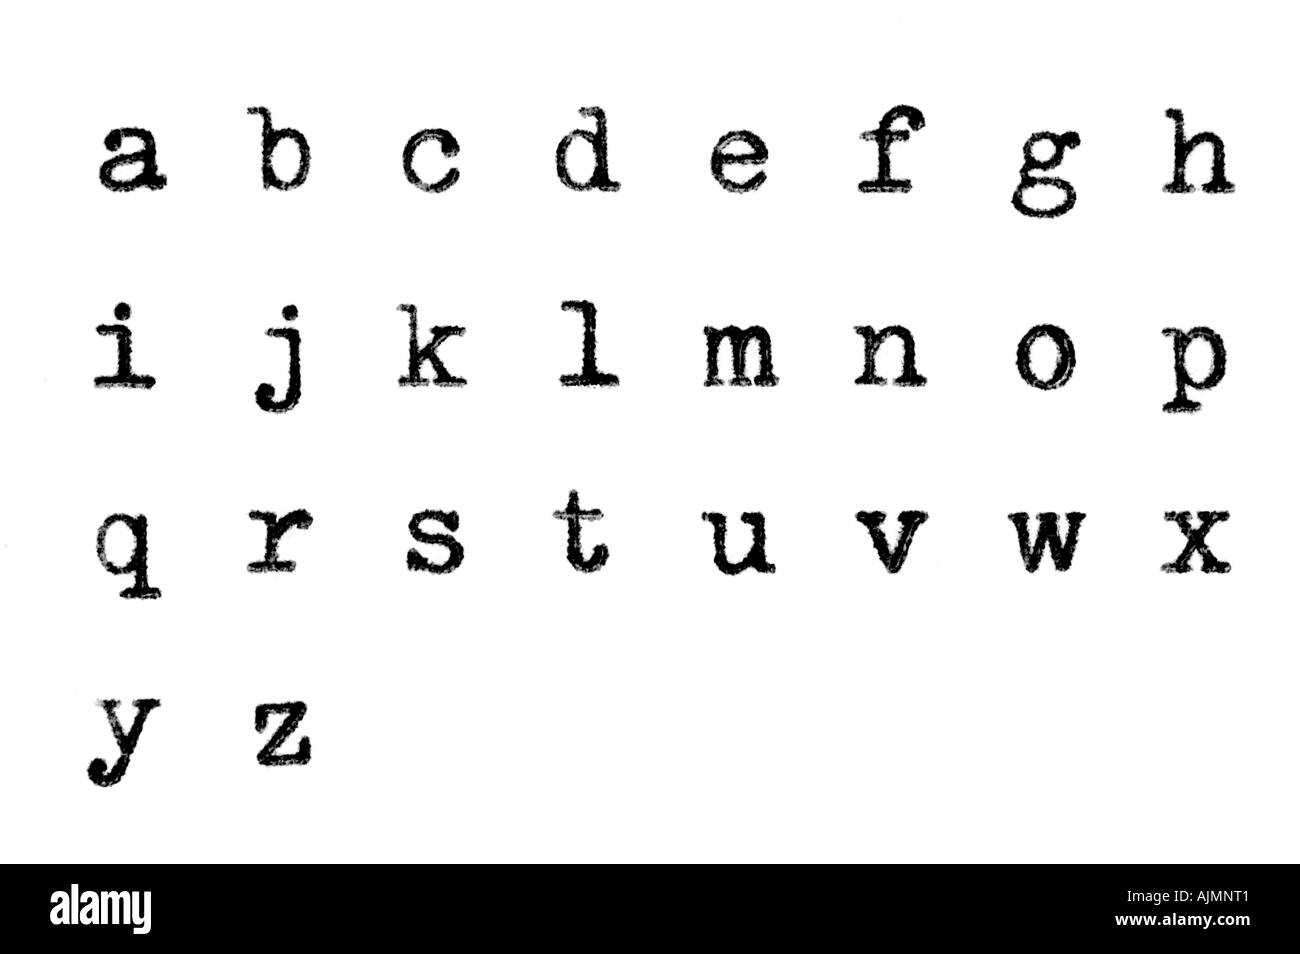 Grungy lettere minuscole - font Courier Foto stock - Alamy